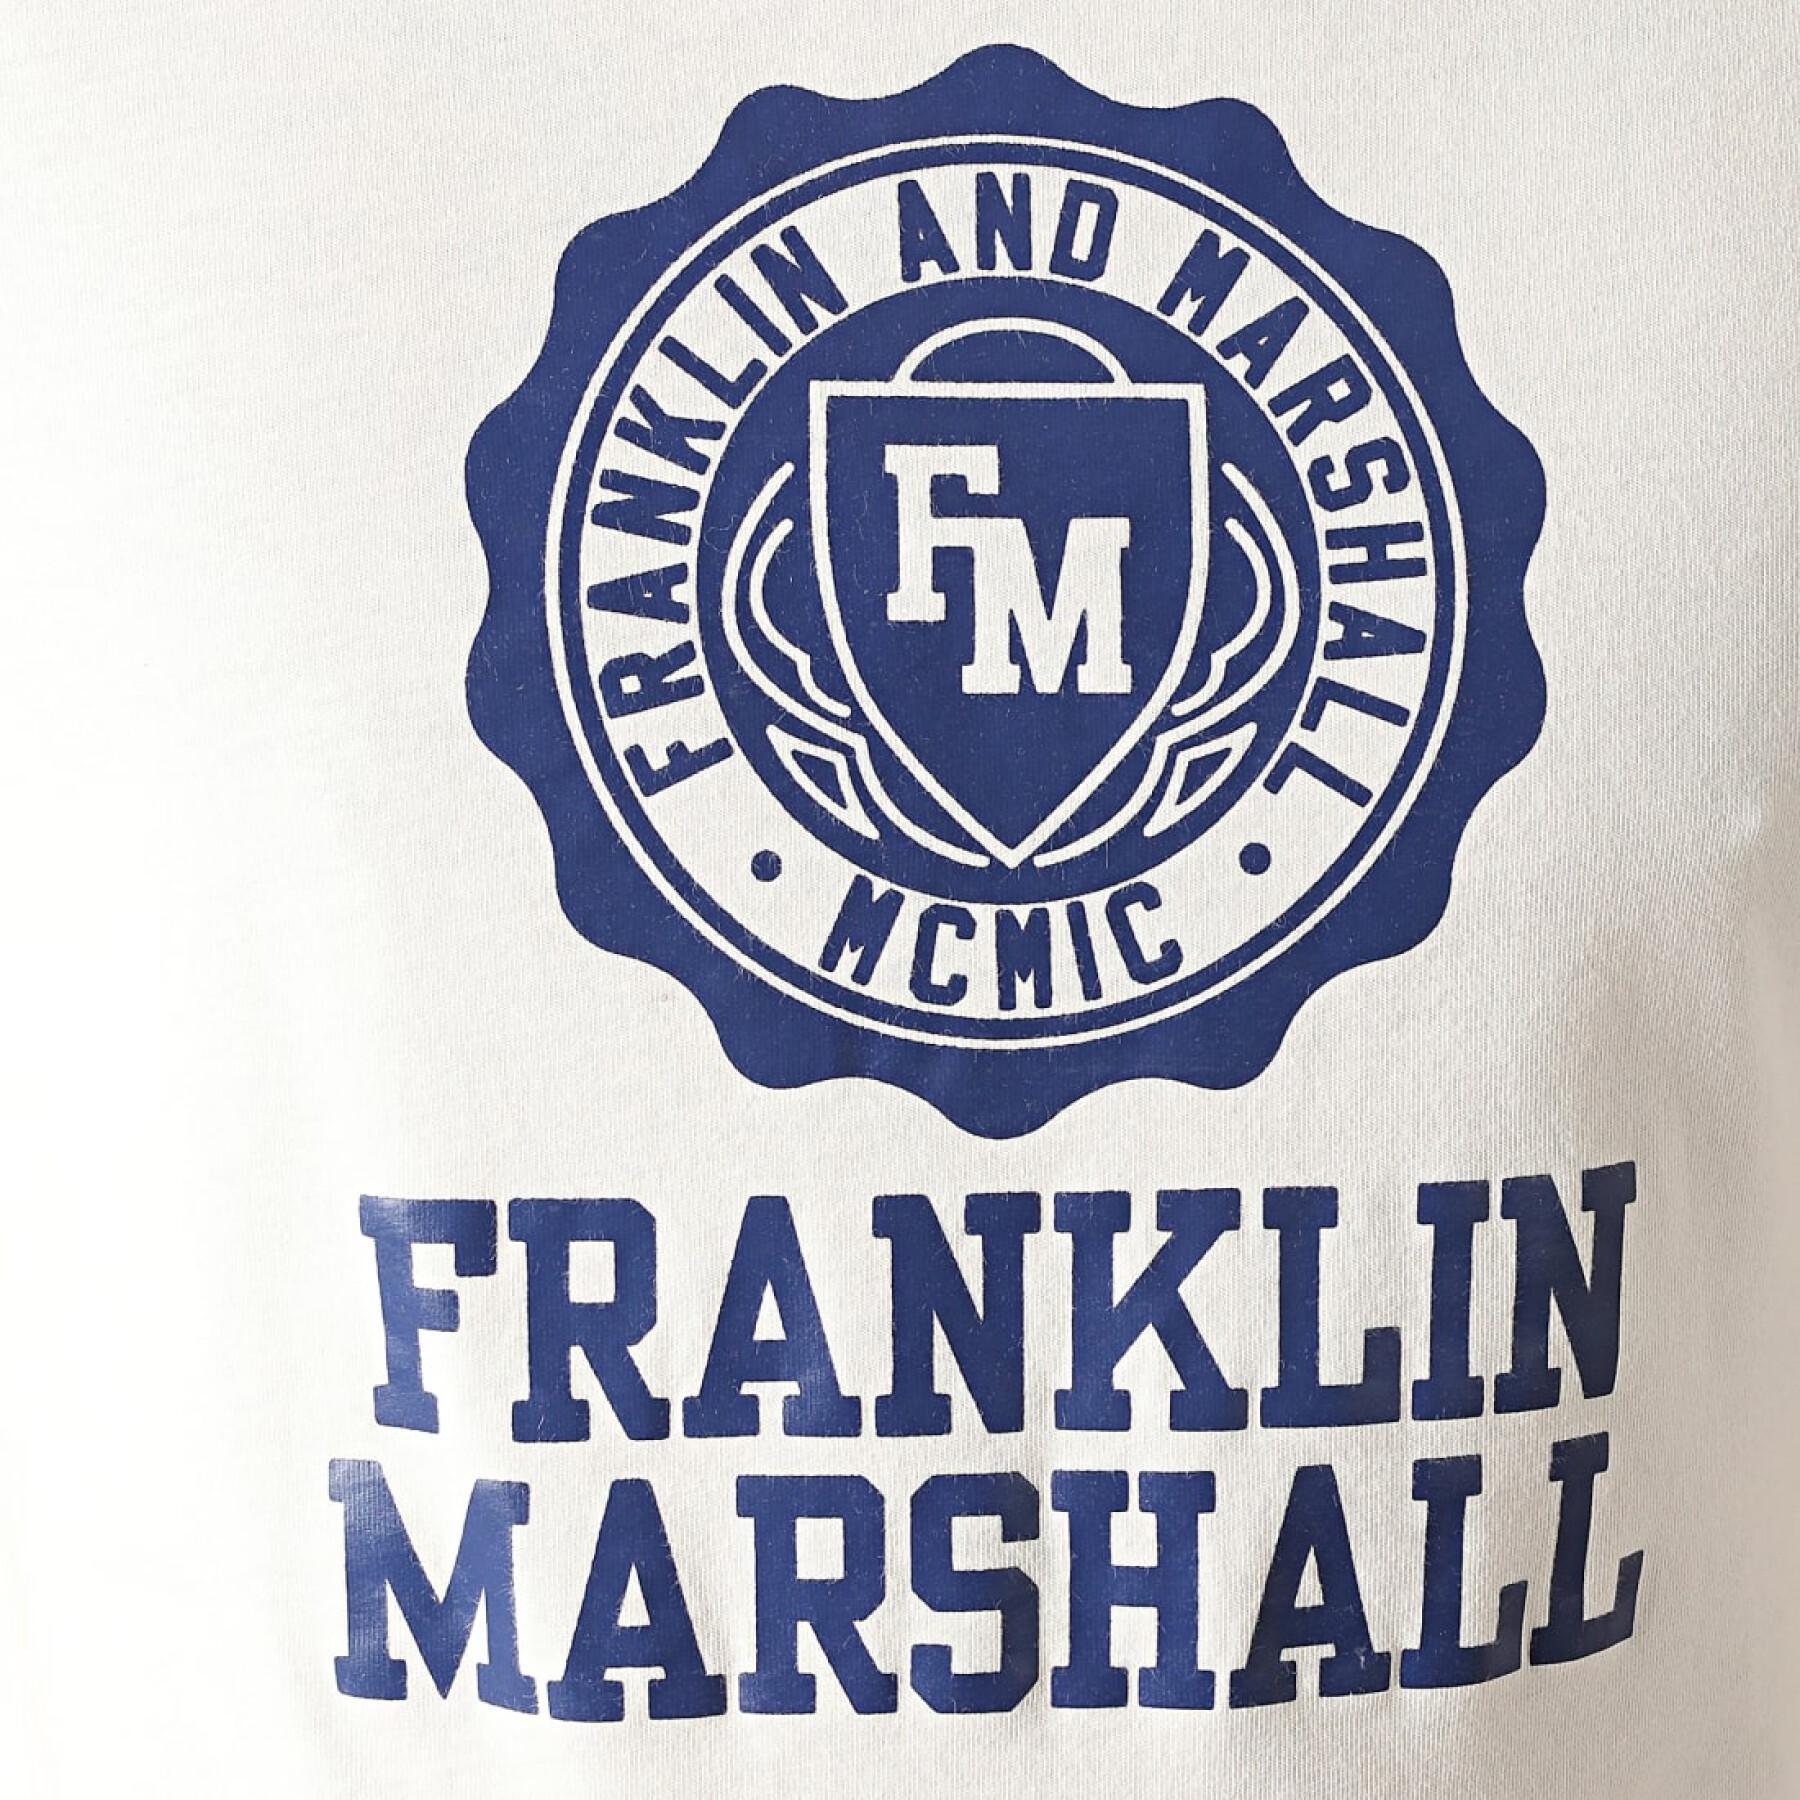 T-shirt Franklin & Marshall Clássico